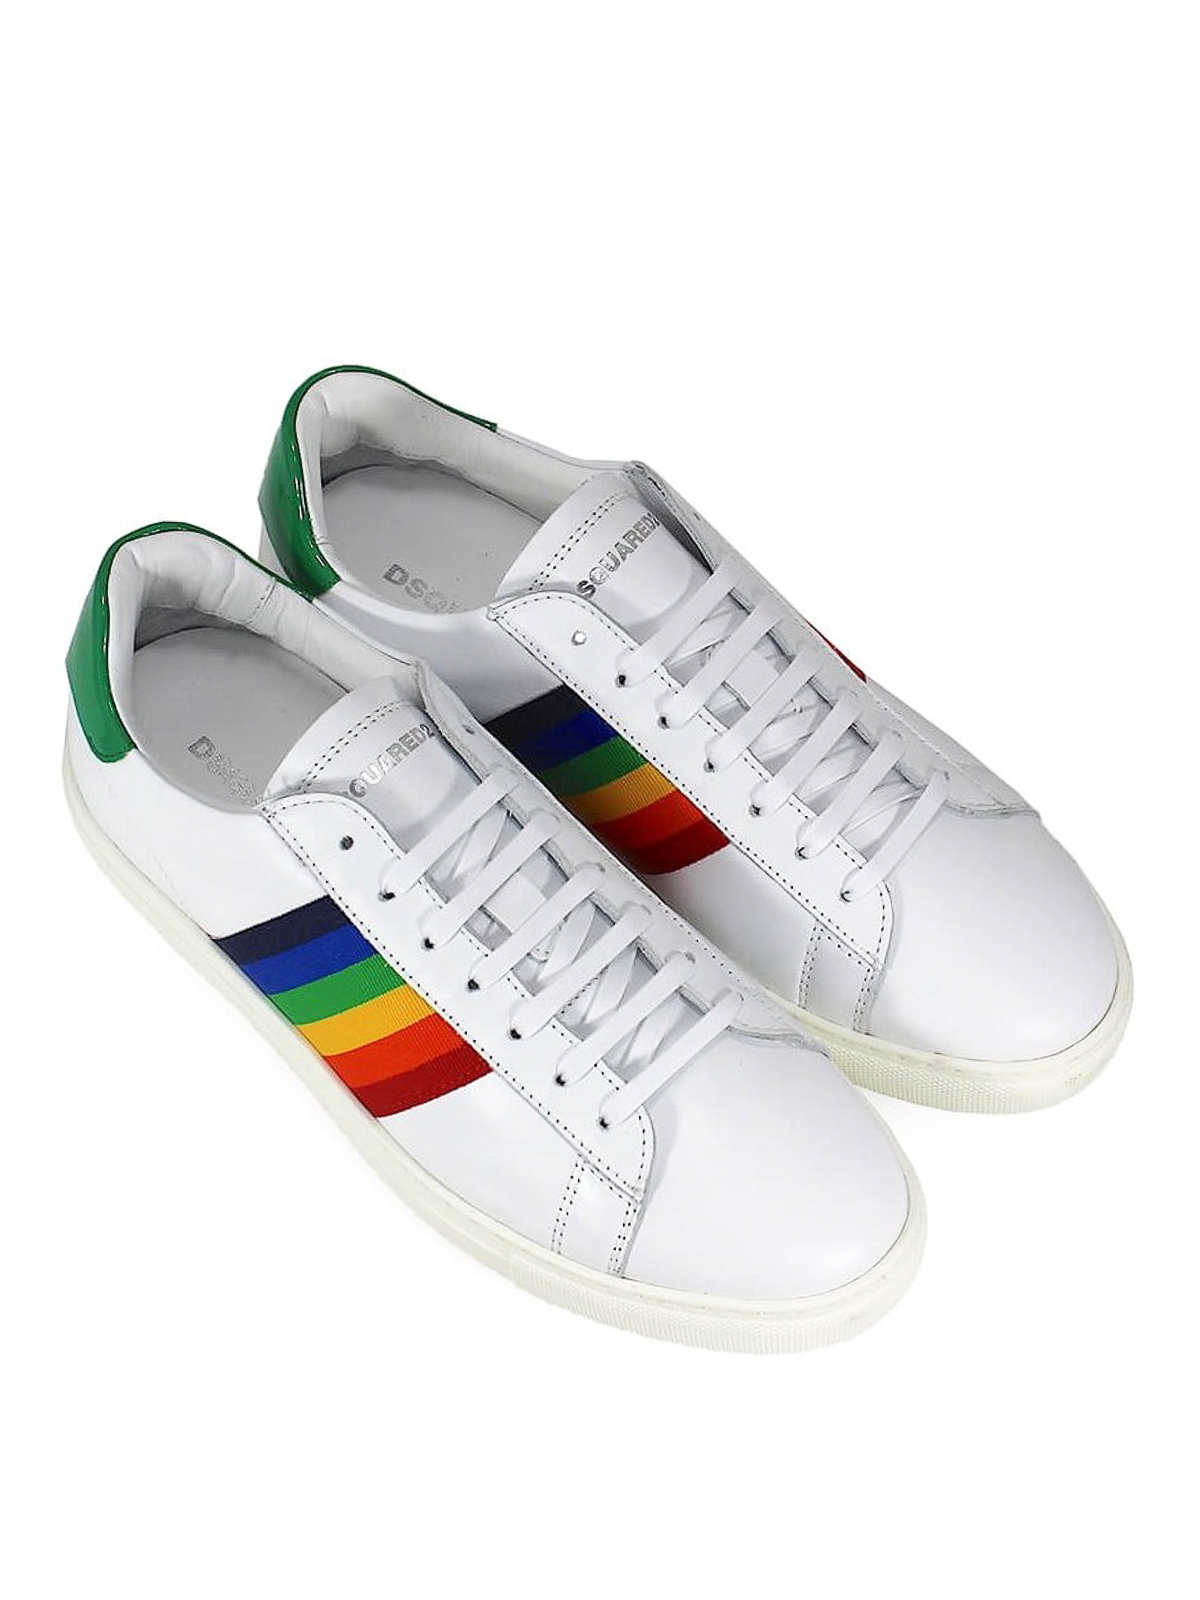 dsquared2 rainbow sneaker